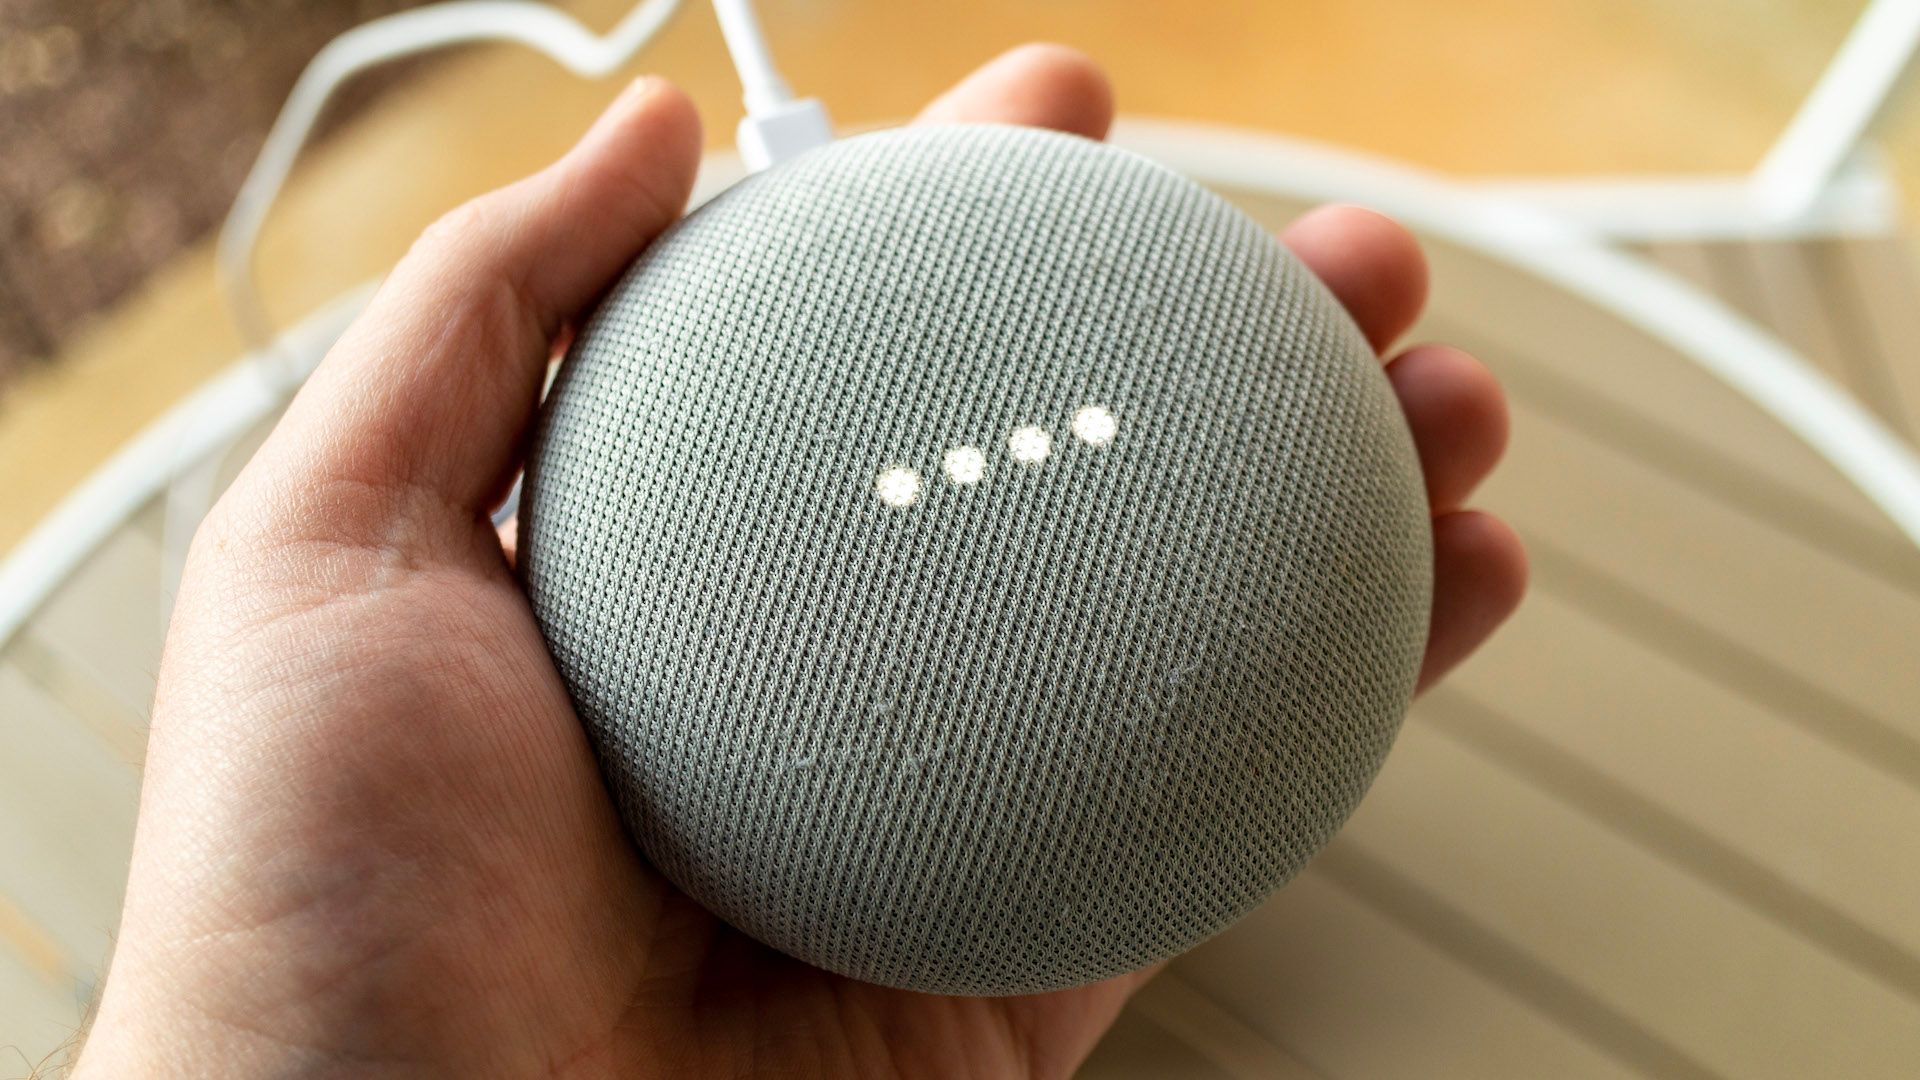 Person holding a Google Nest Mini smart speaker